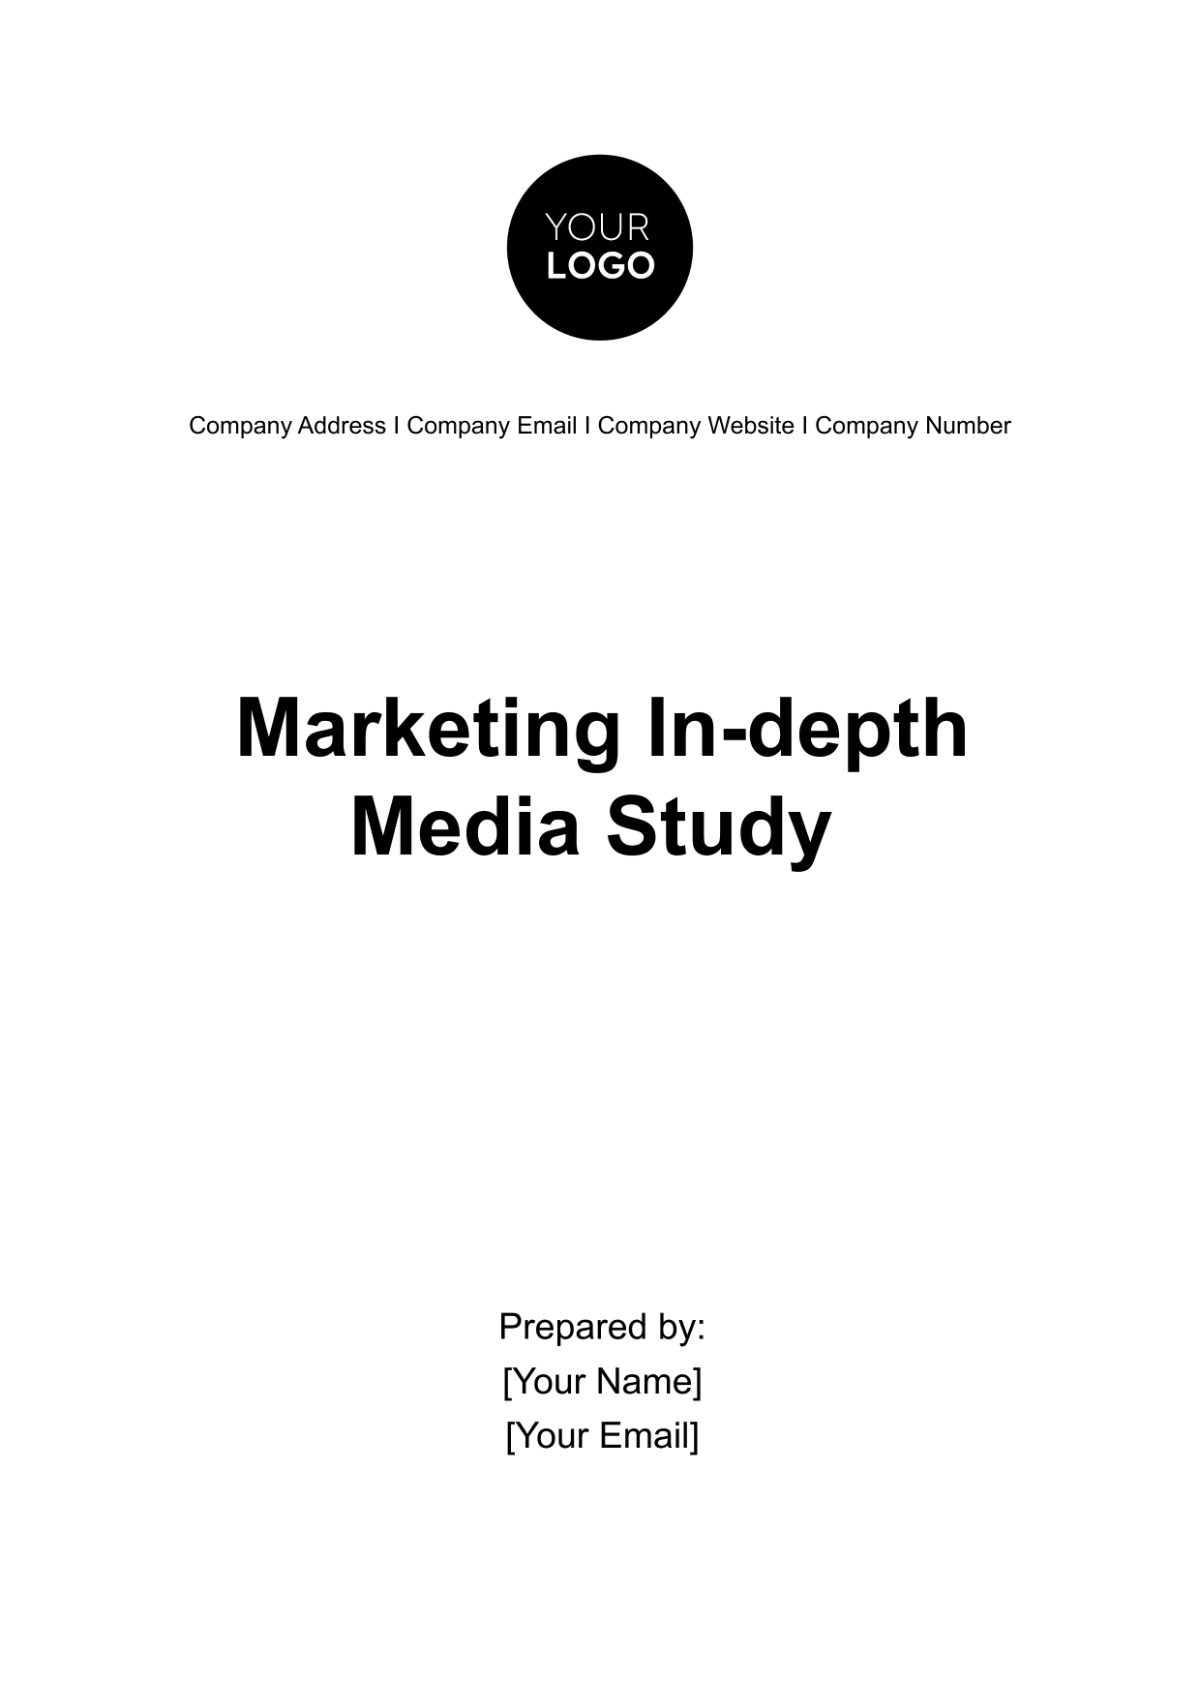 Marketing In-depth Media Study Template